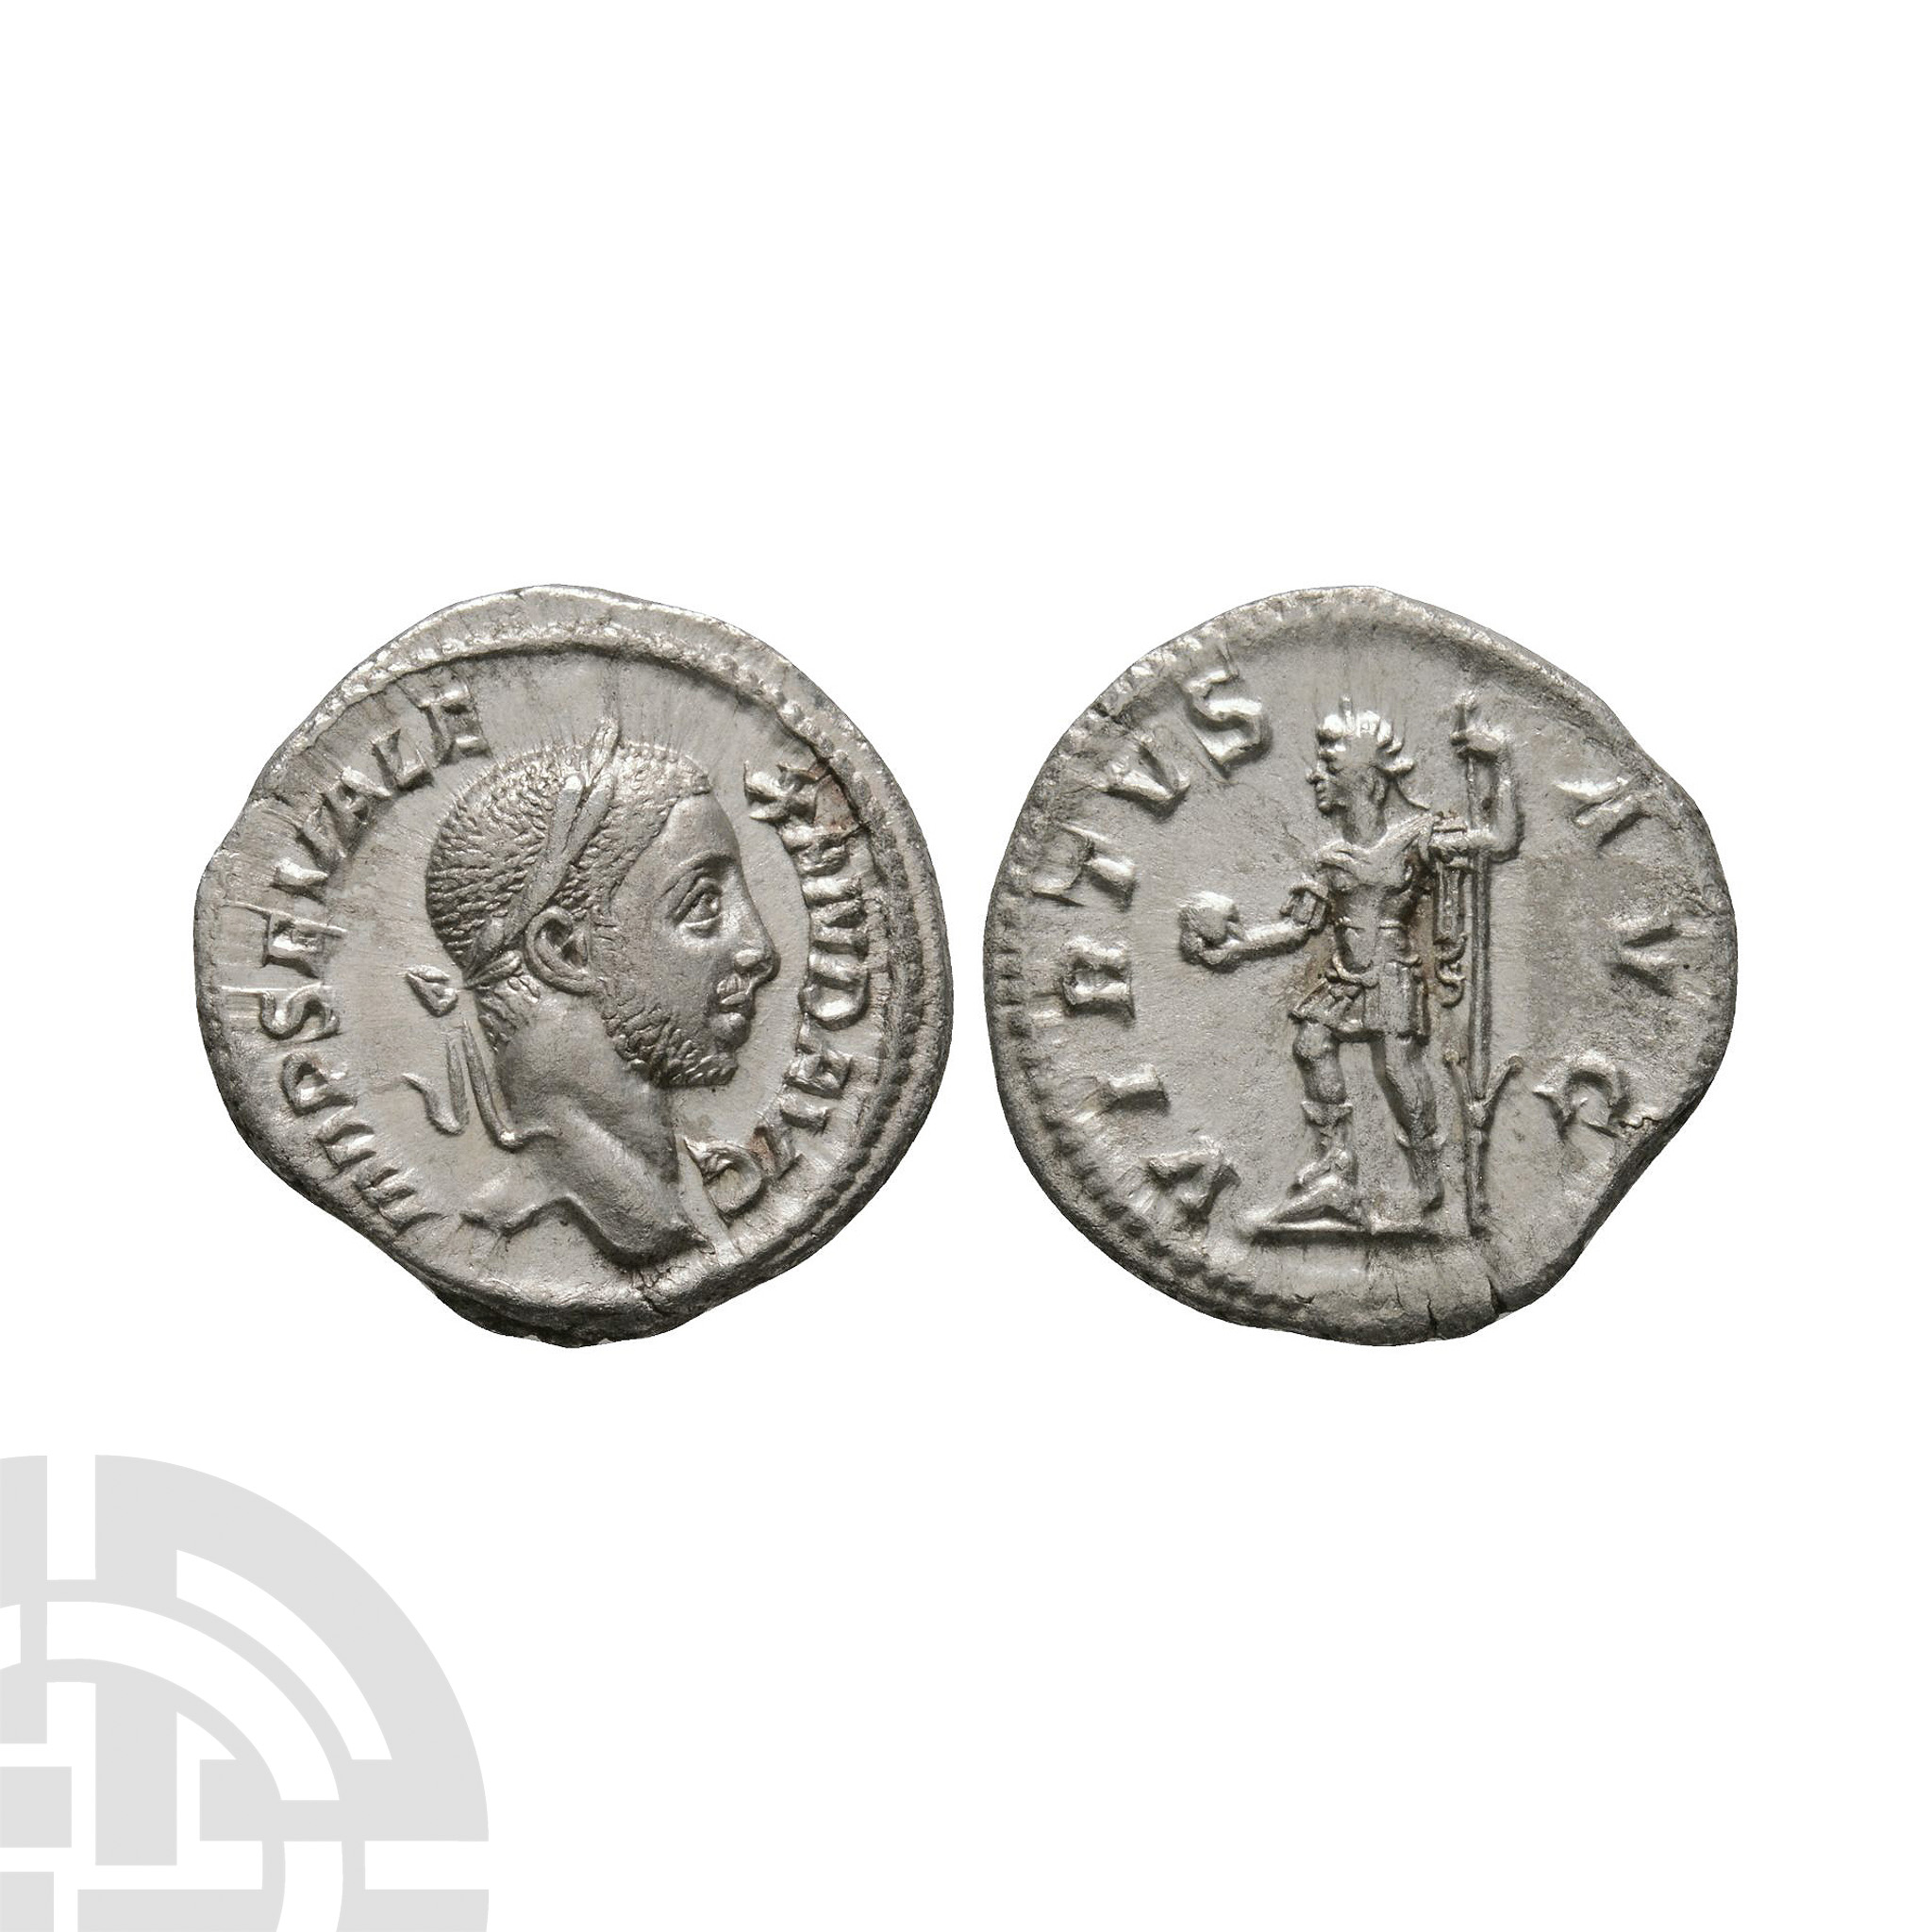 Ancient Roman Imperial Coins - Severus Alexander - Virtus AR Denarius